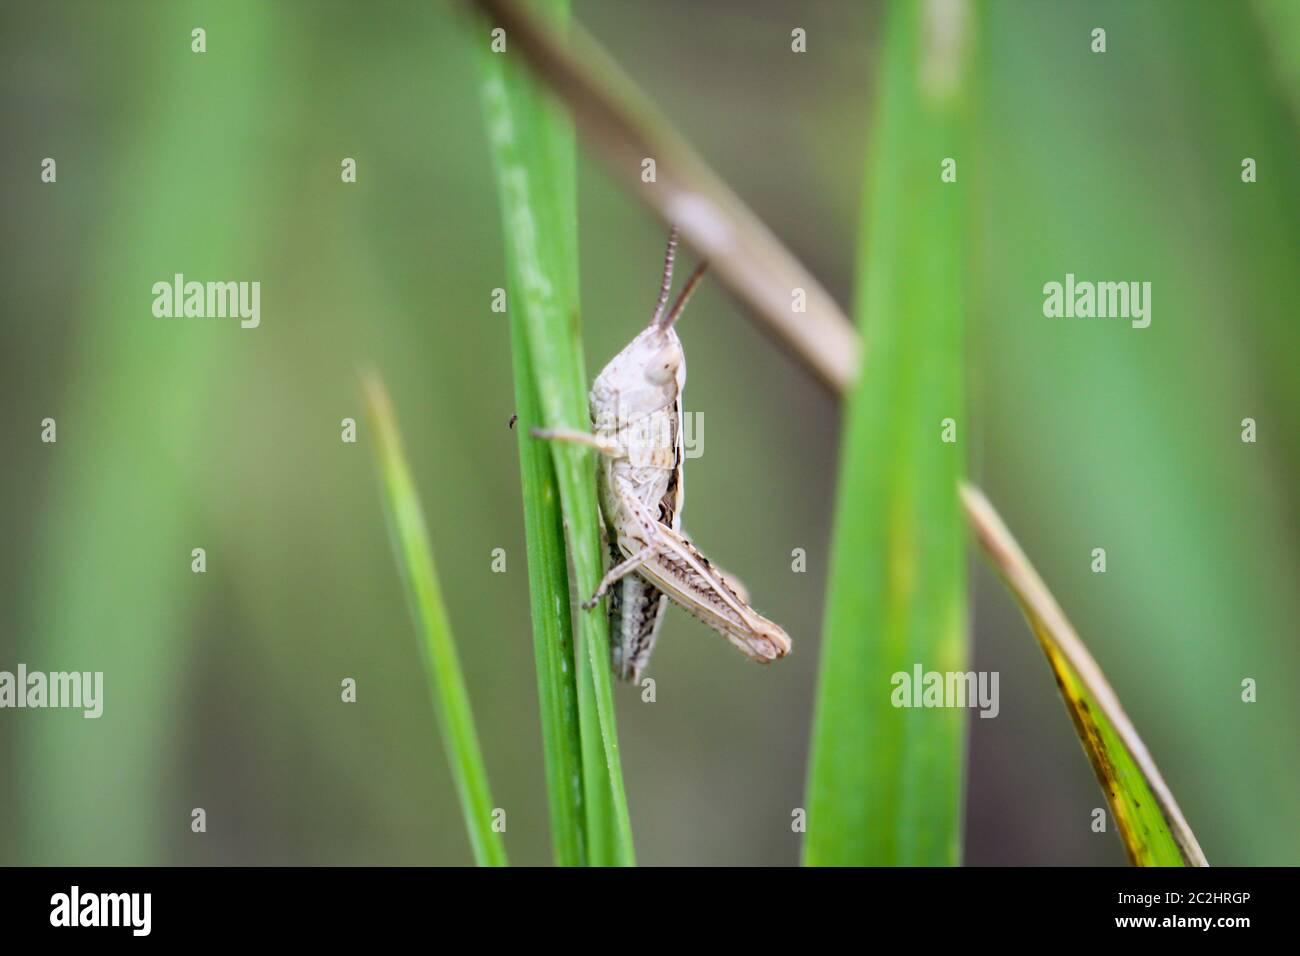 a grasshopper on a plant Stock Photo